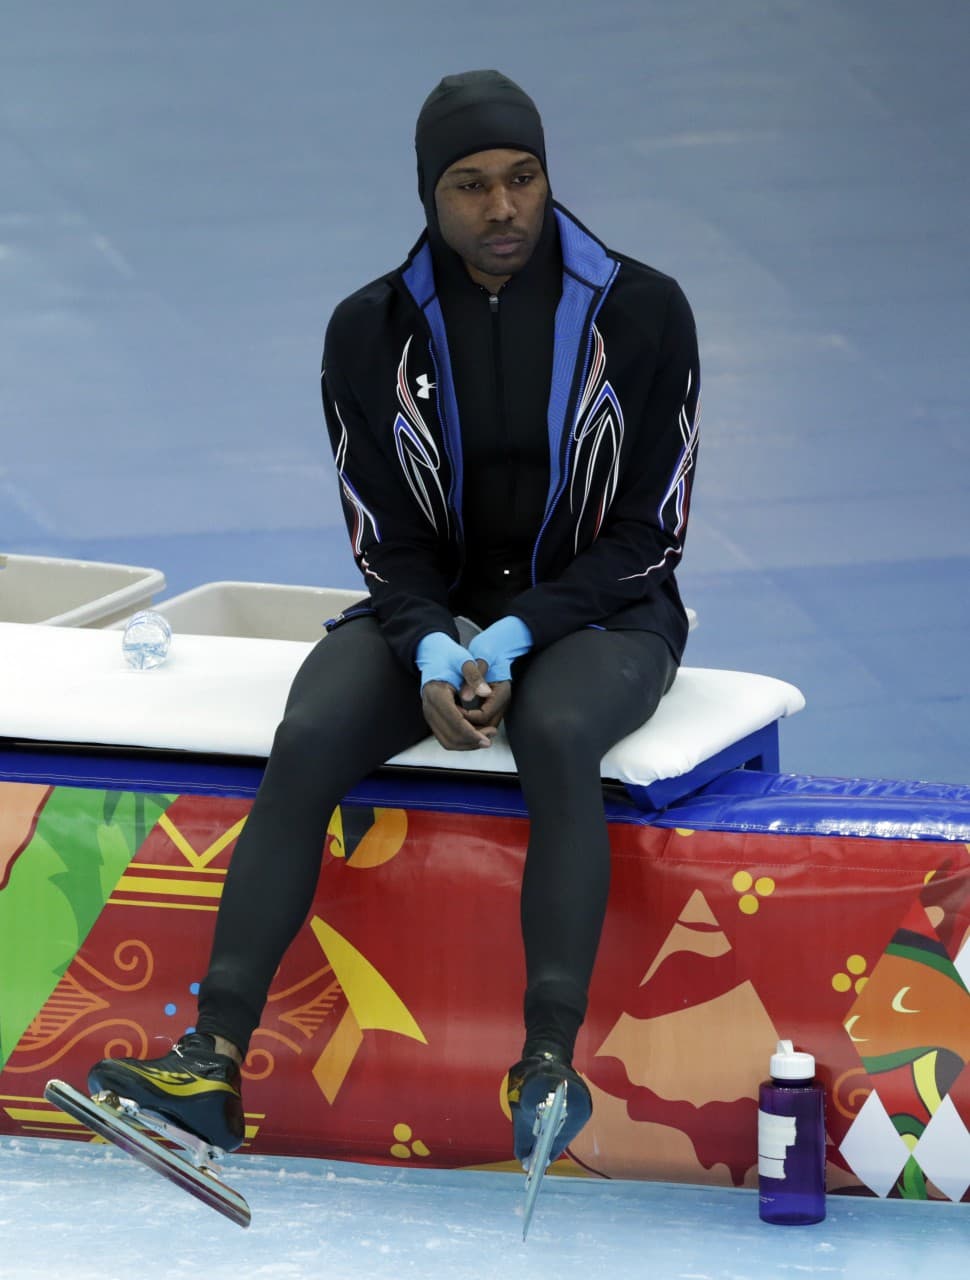 Shani Davis looks dejected after competing in the men's 1,500-meter Olympic speedskating race, Saturday, Feb. 15, 2014. (Matt Dunham/AP)